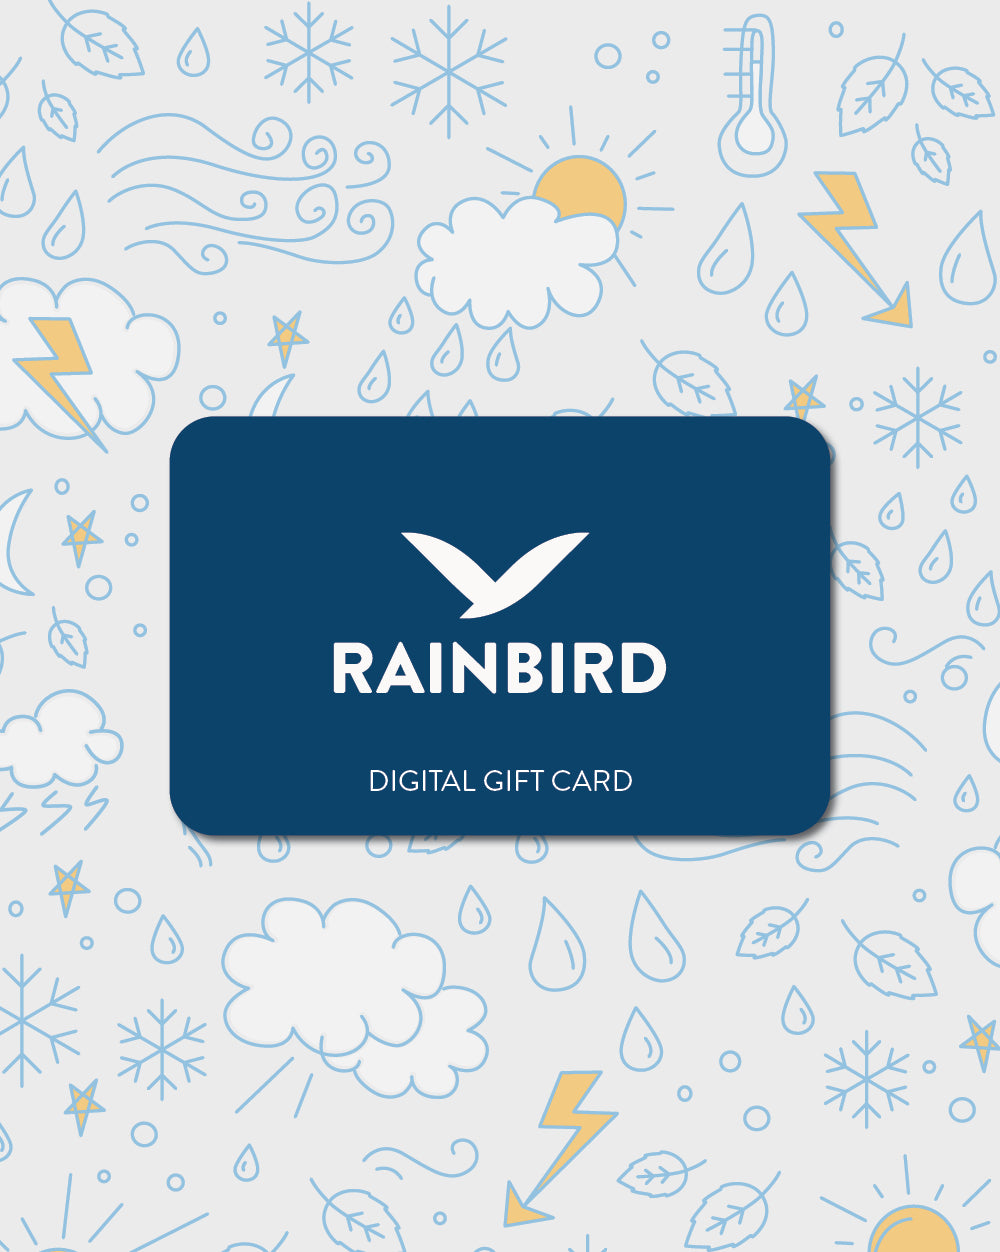 Rainbird Digital Gift Card